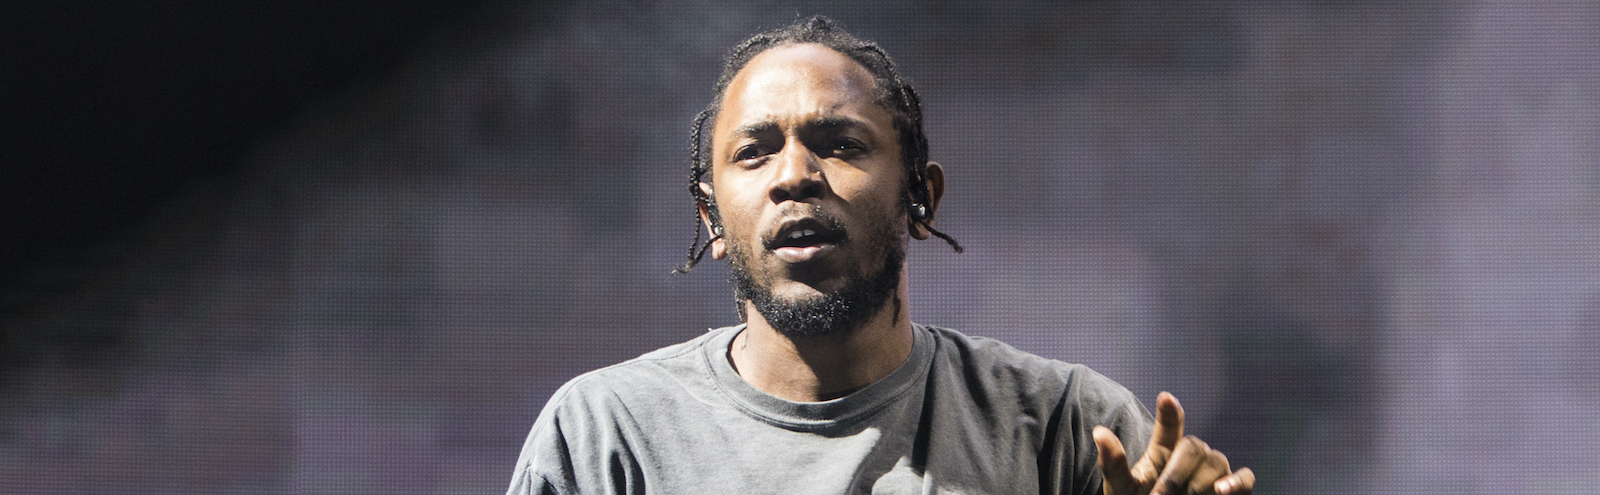 Kendrick Lamar Returns to Billboard Charts Biggest Hit in 3 Years